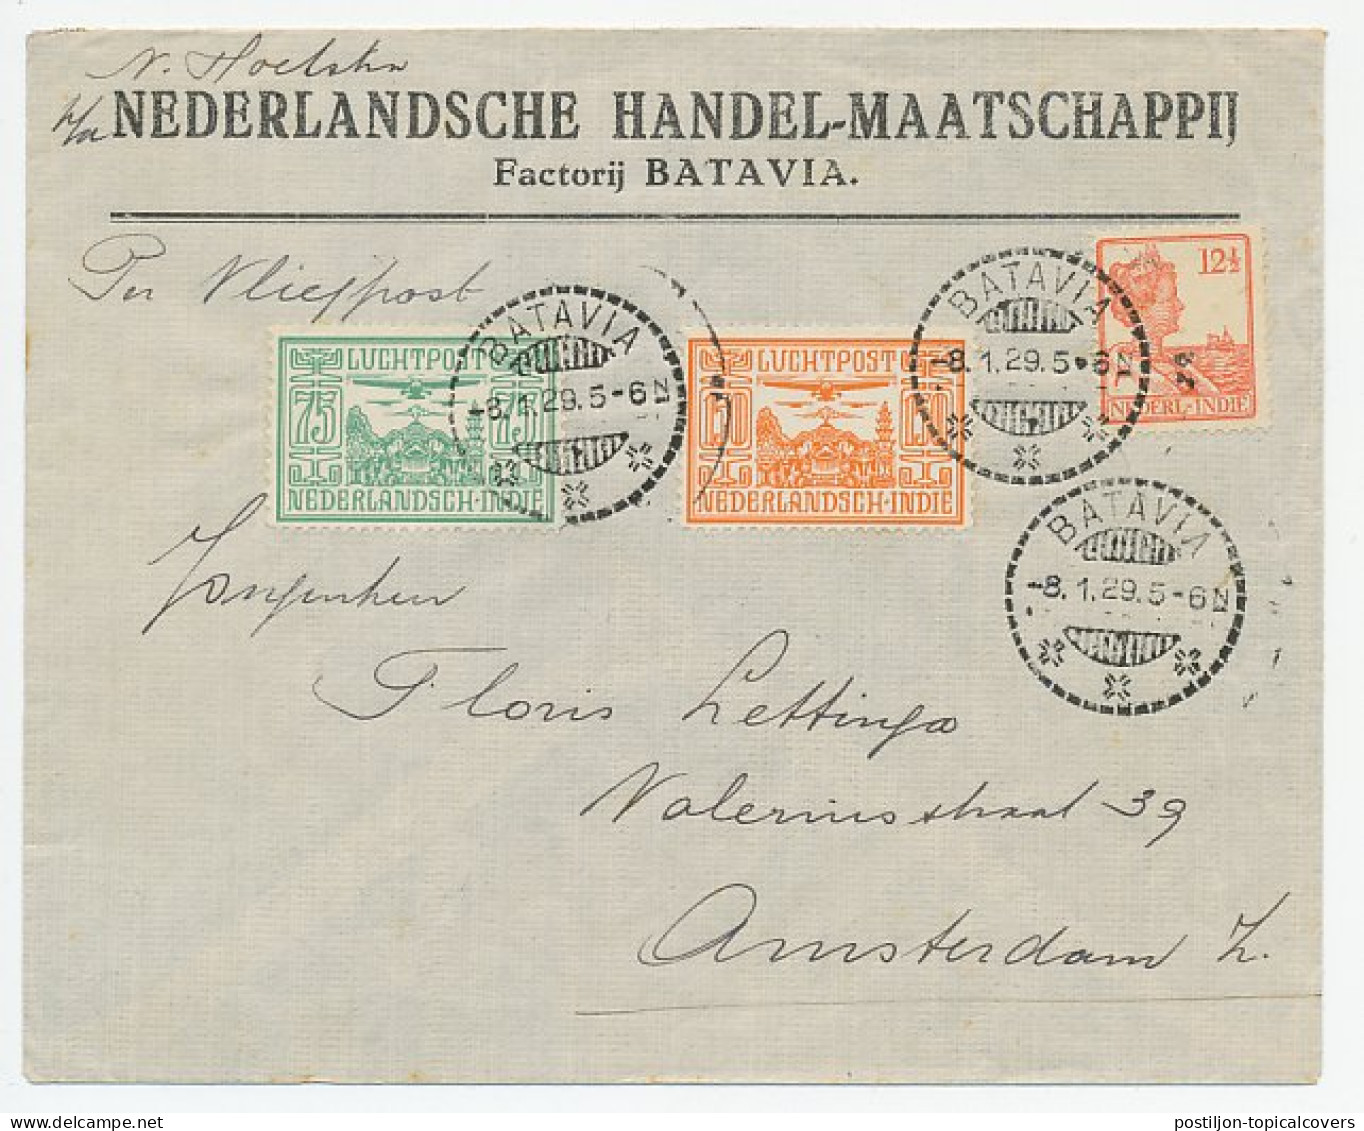 VH B 24 C Batavia Ned. Indie - Amsterdam 1929 - Unclassified